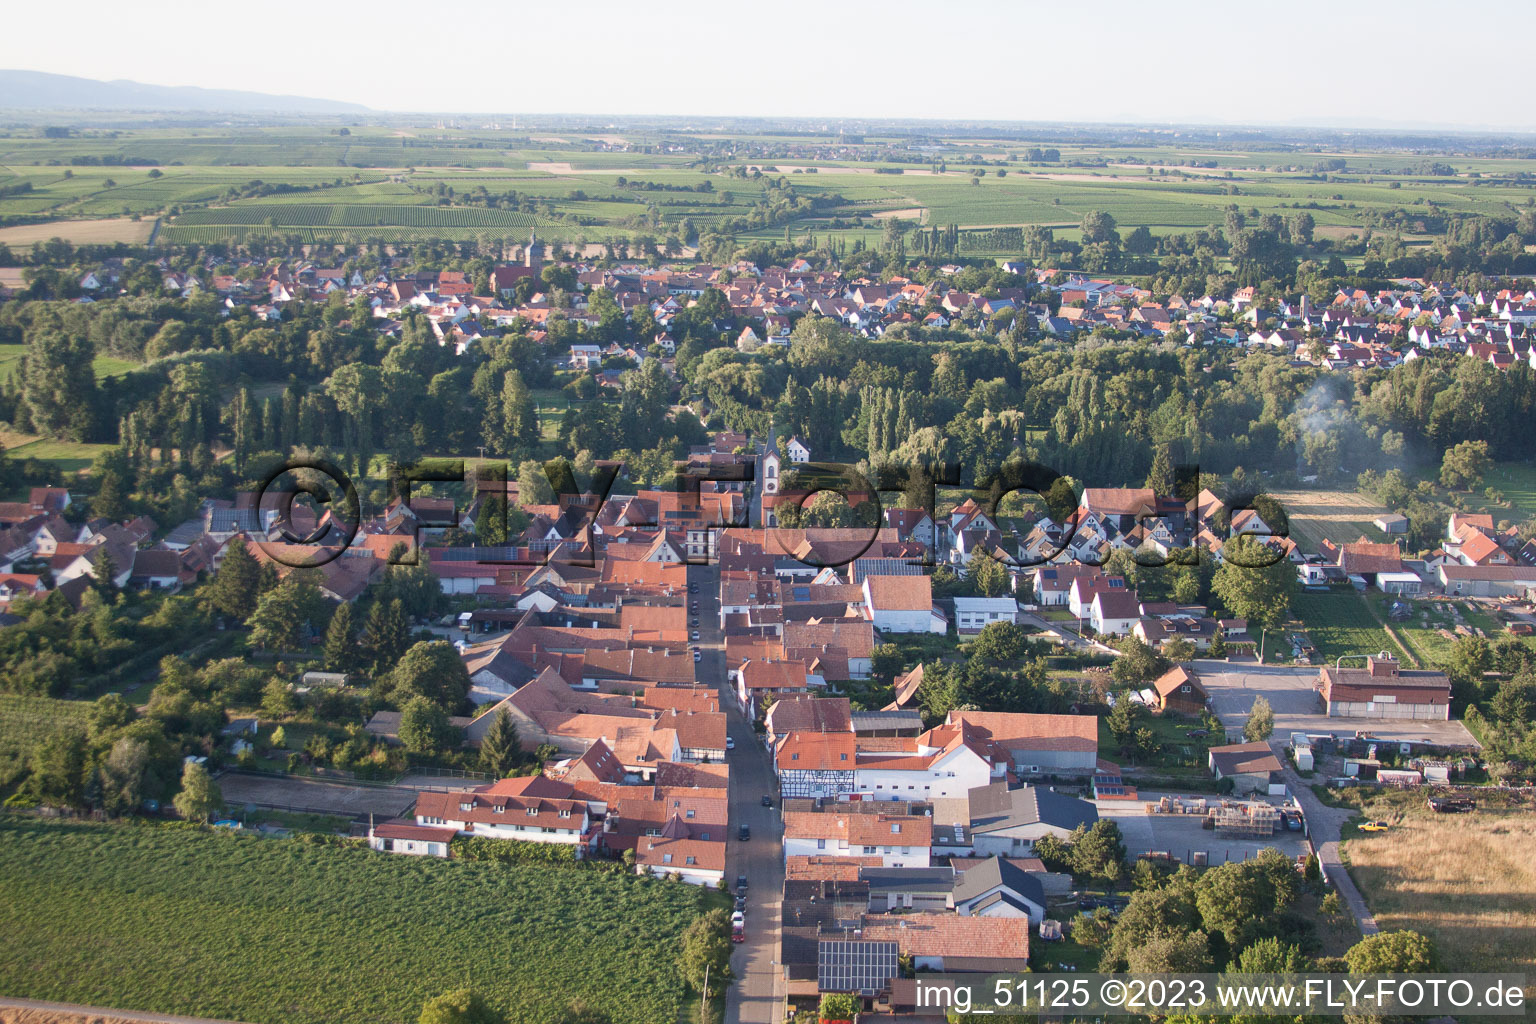 Quartier Mühlhofen in Billigheim-Ingenheim dans le département Rhénanie-Palatinat, Allemagne vu d'un drone